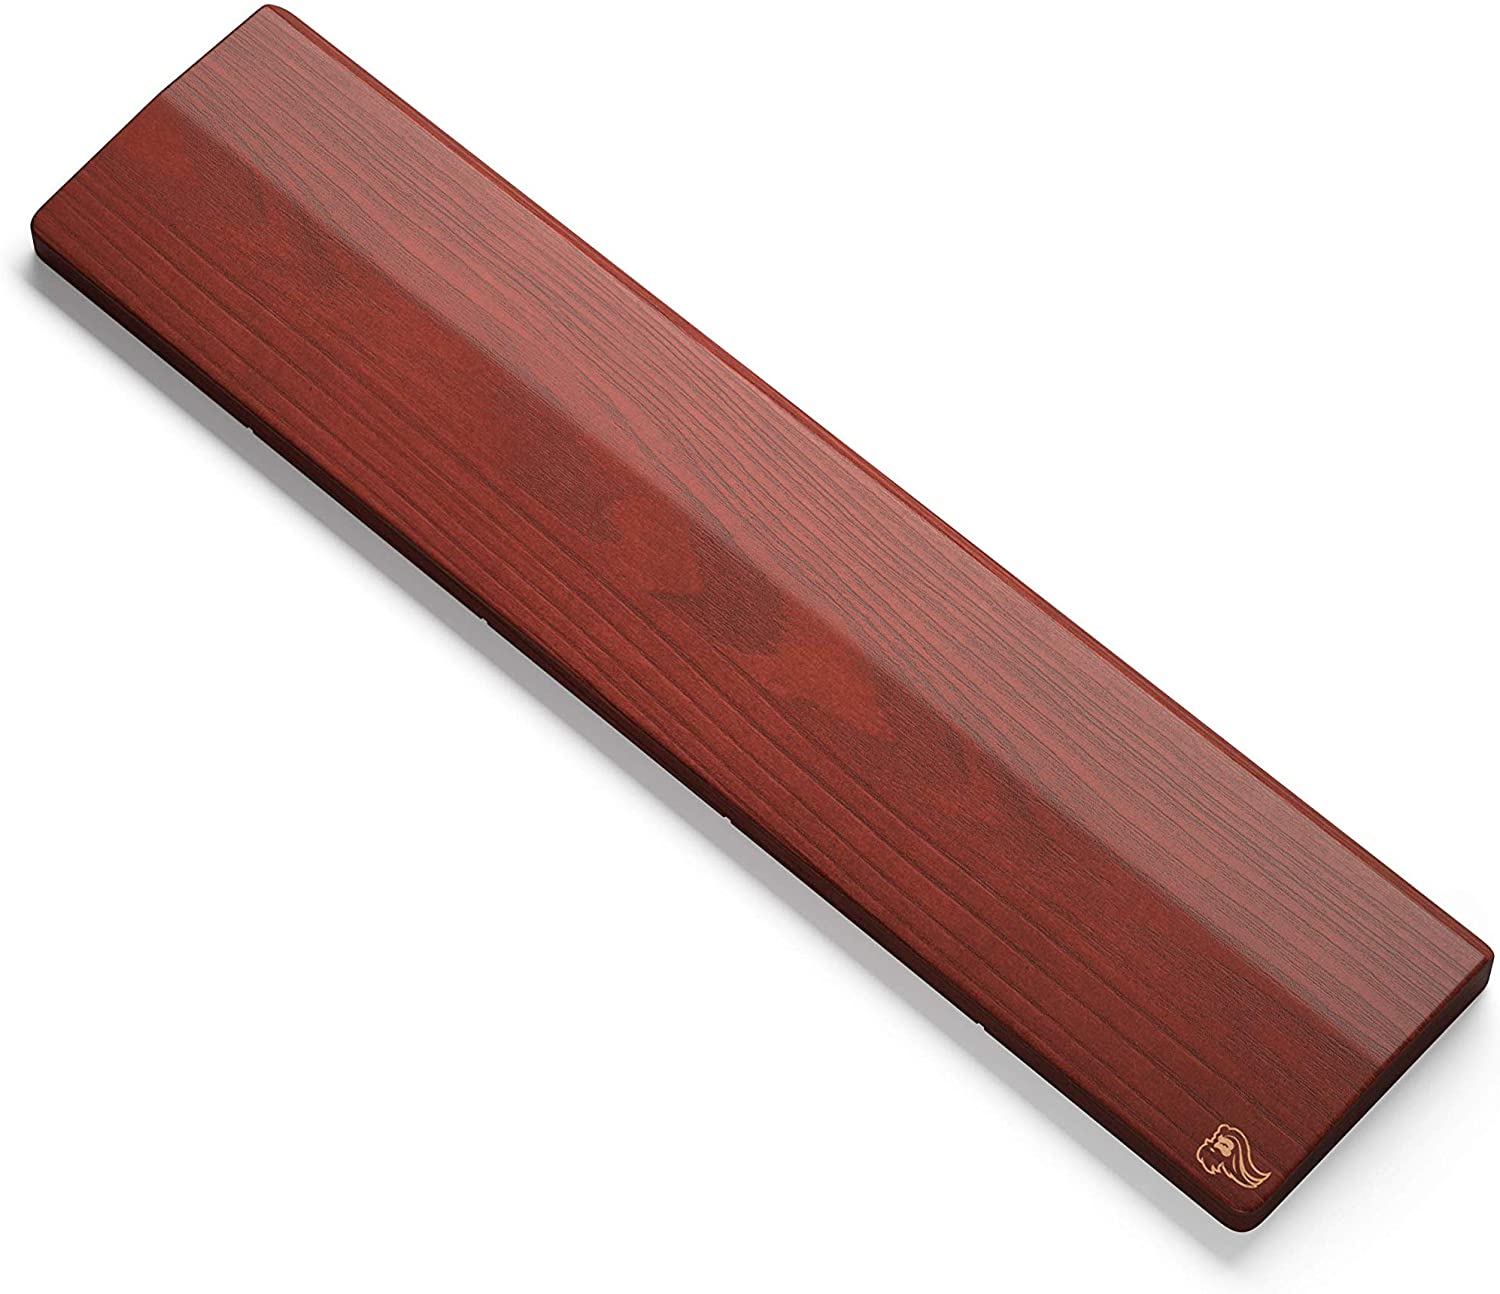 Glorious Full Standard Size Keyboard Compatible Wooden Wrist Rest